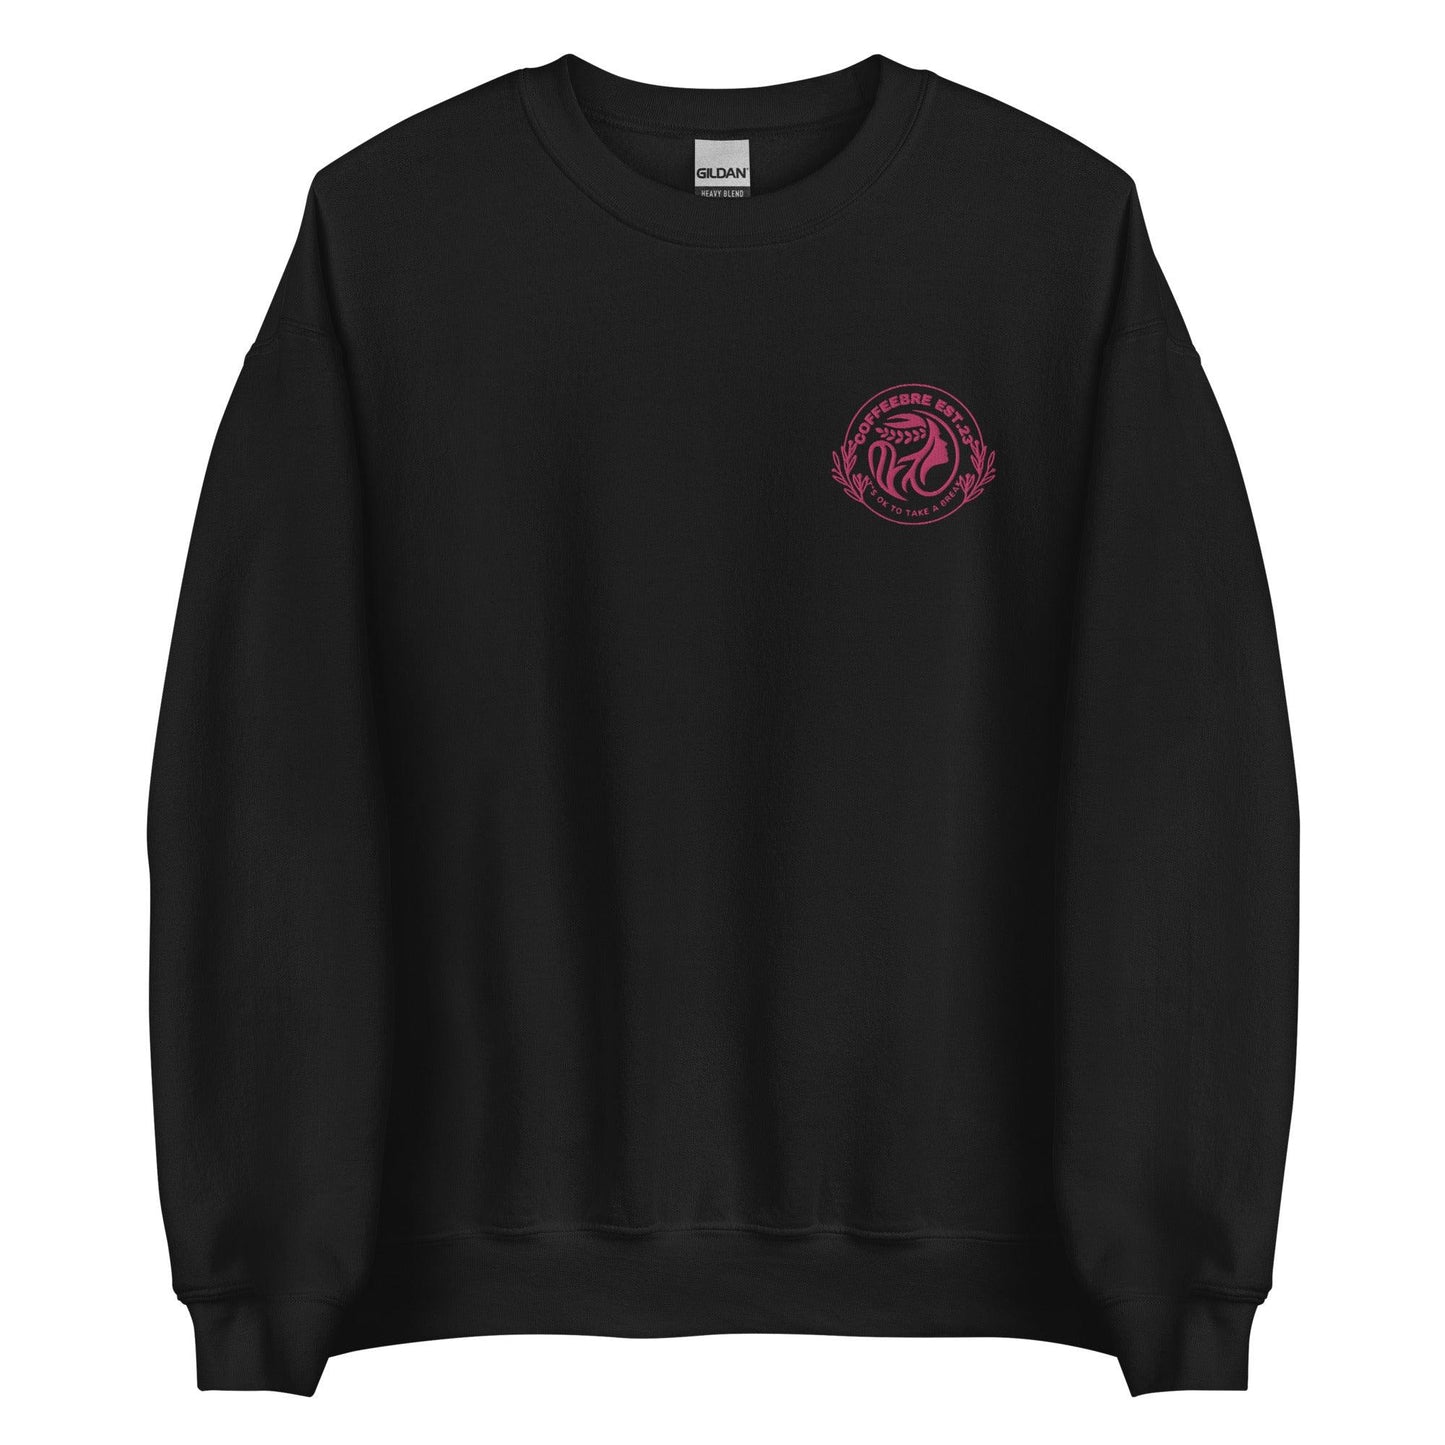 Coffeebre Pink Embroidered Unisex Sweatshirt - COFFEEBRE